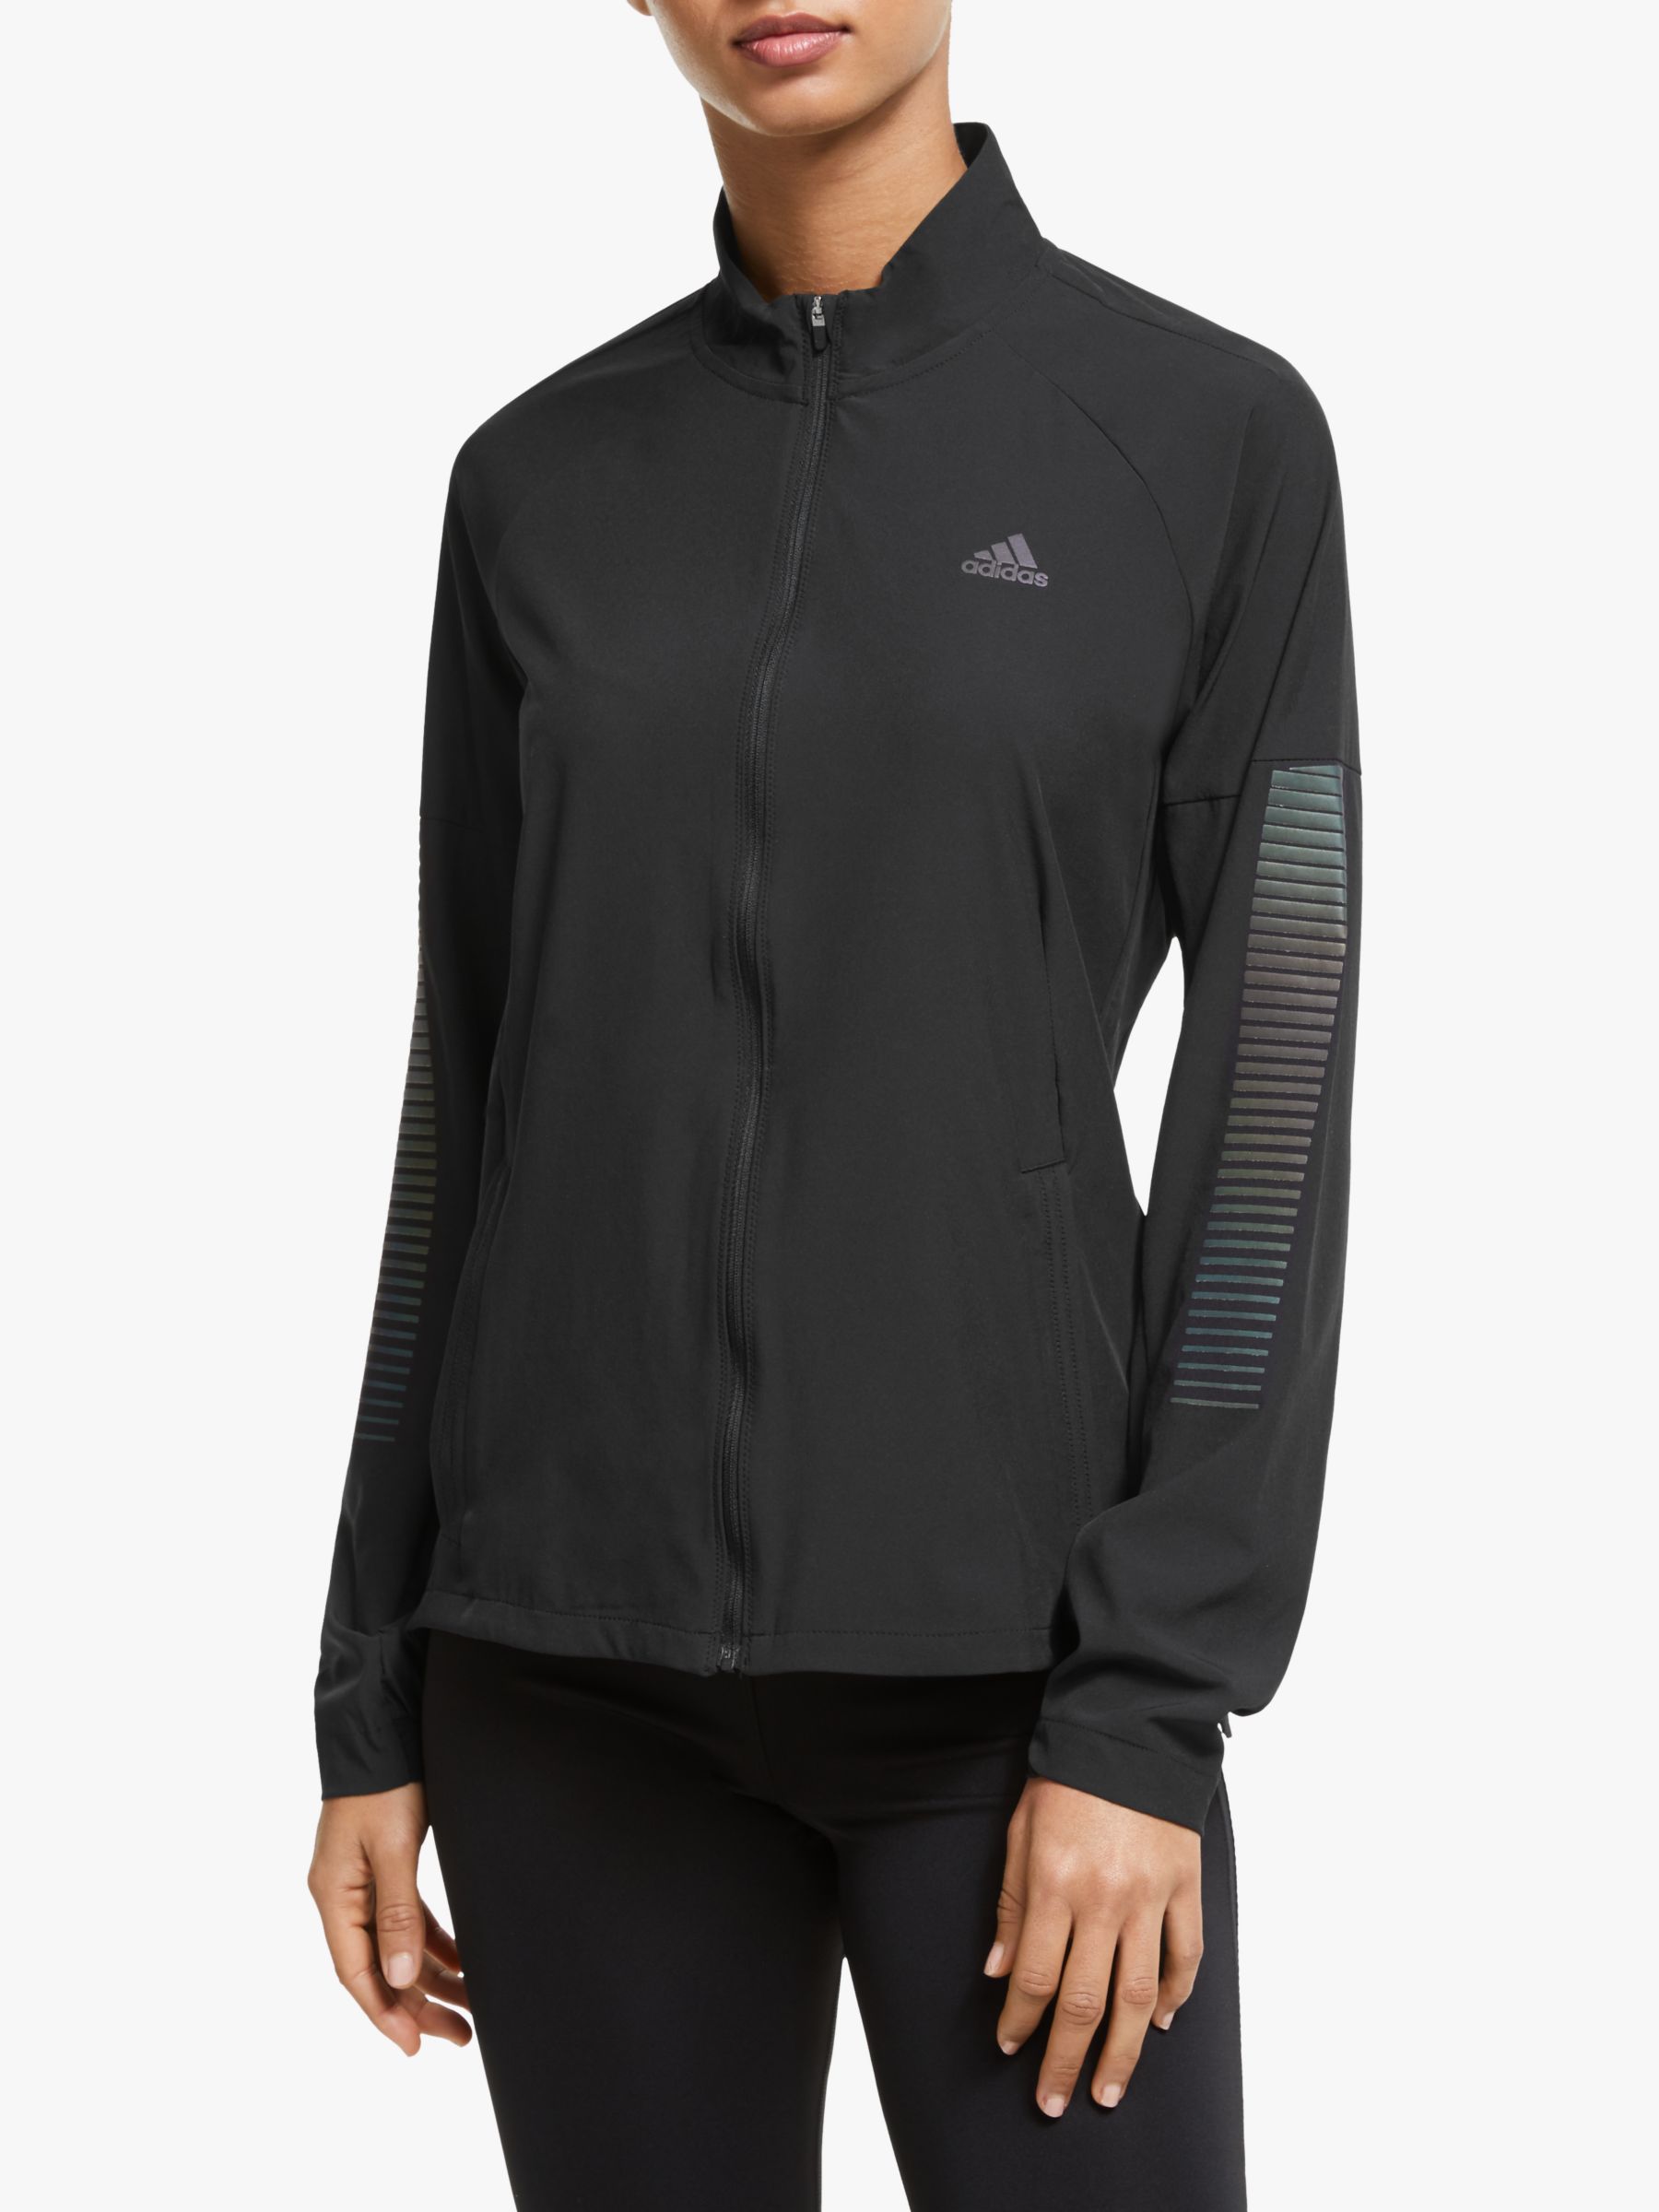 adidas women's running jackets